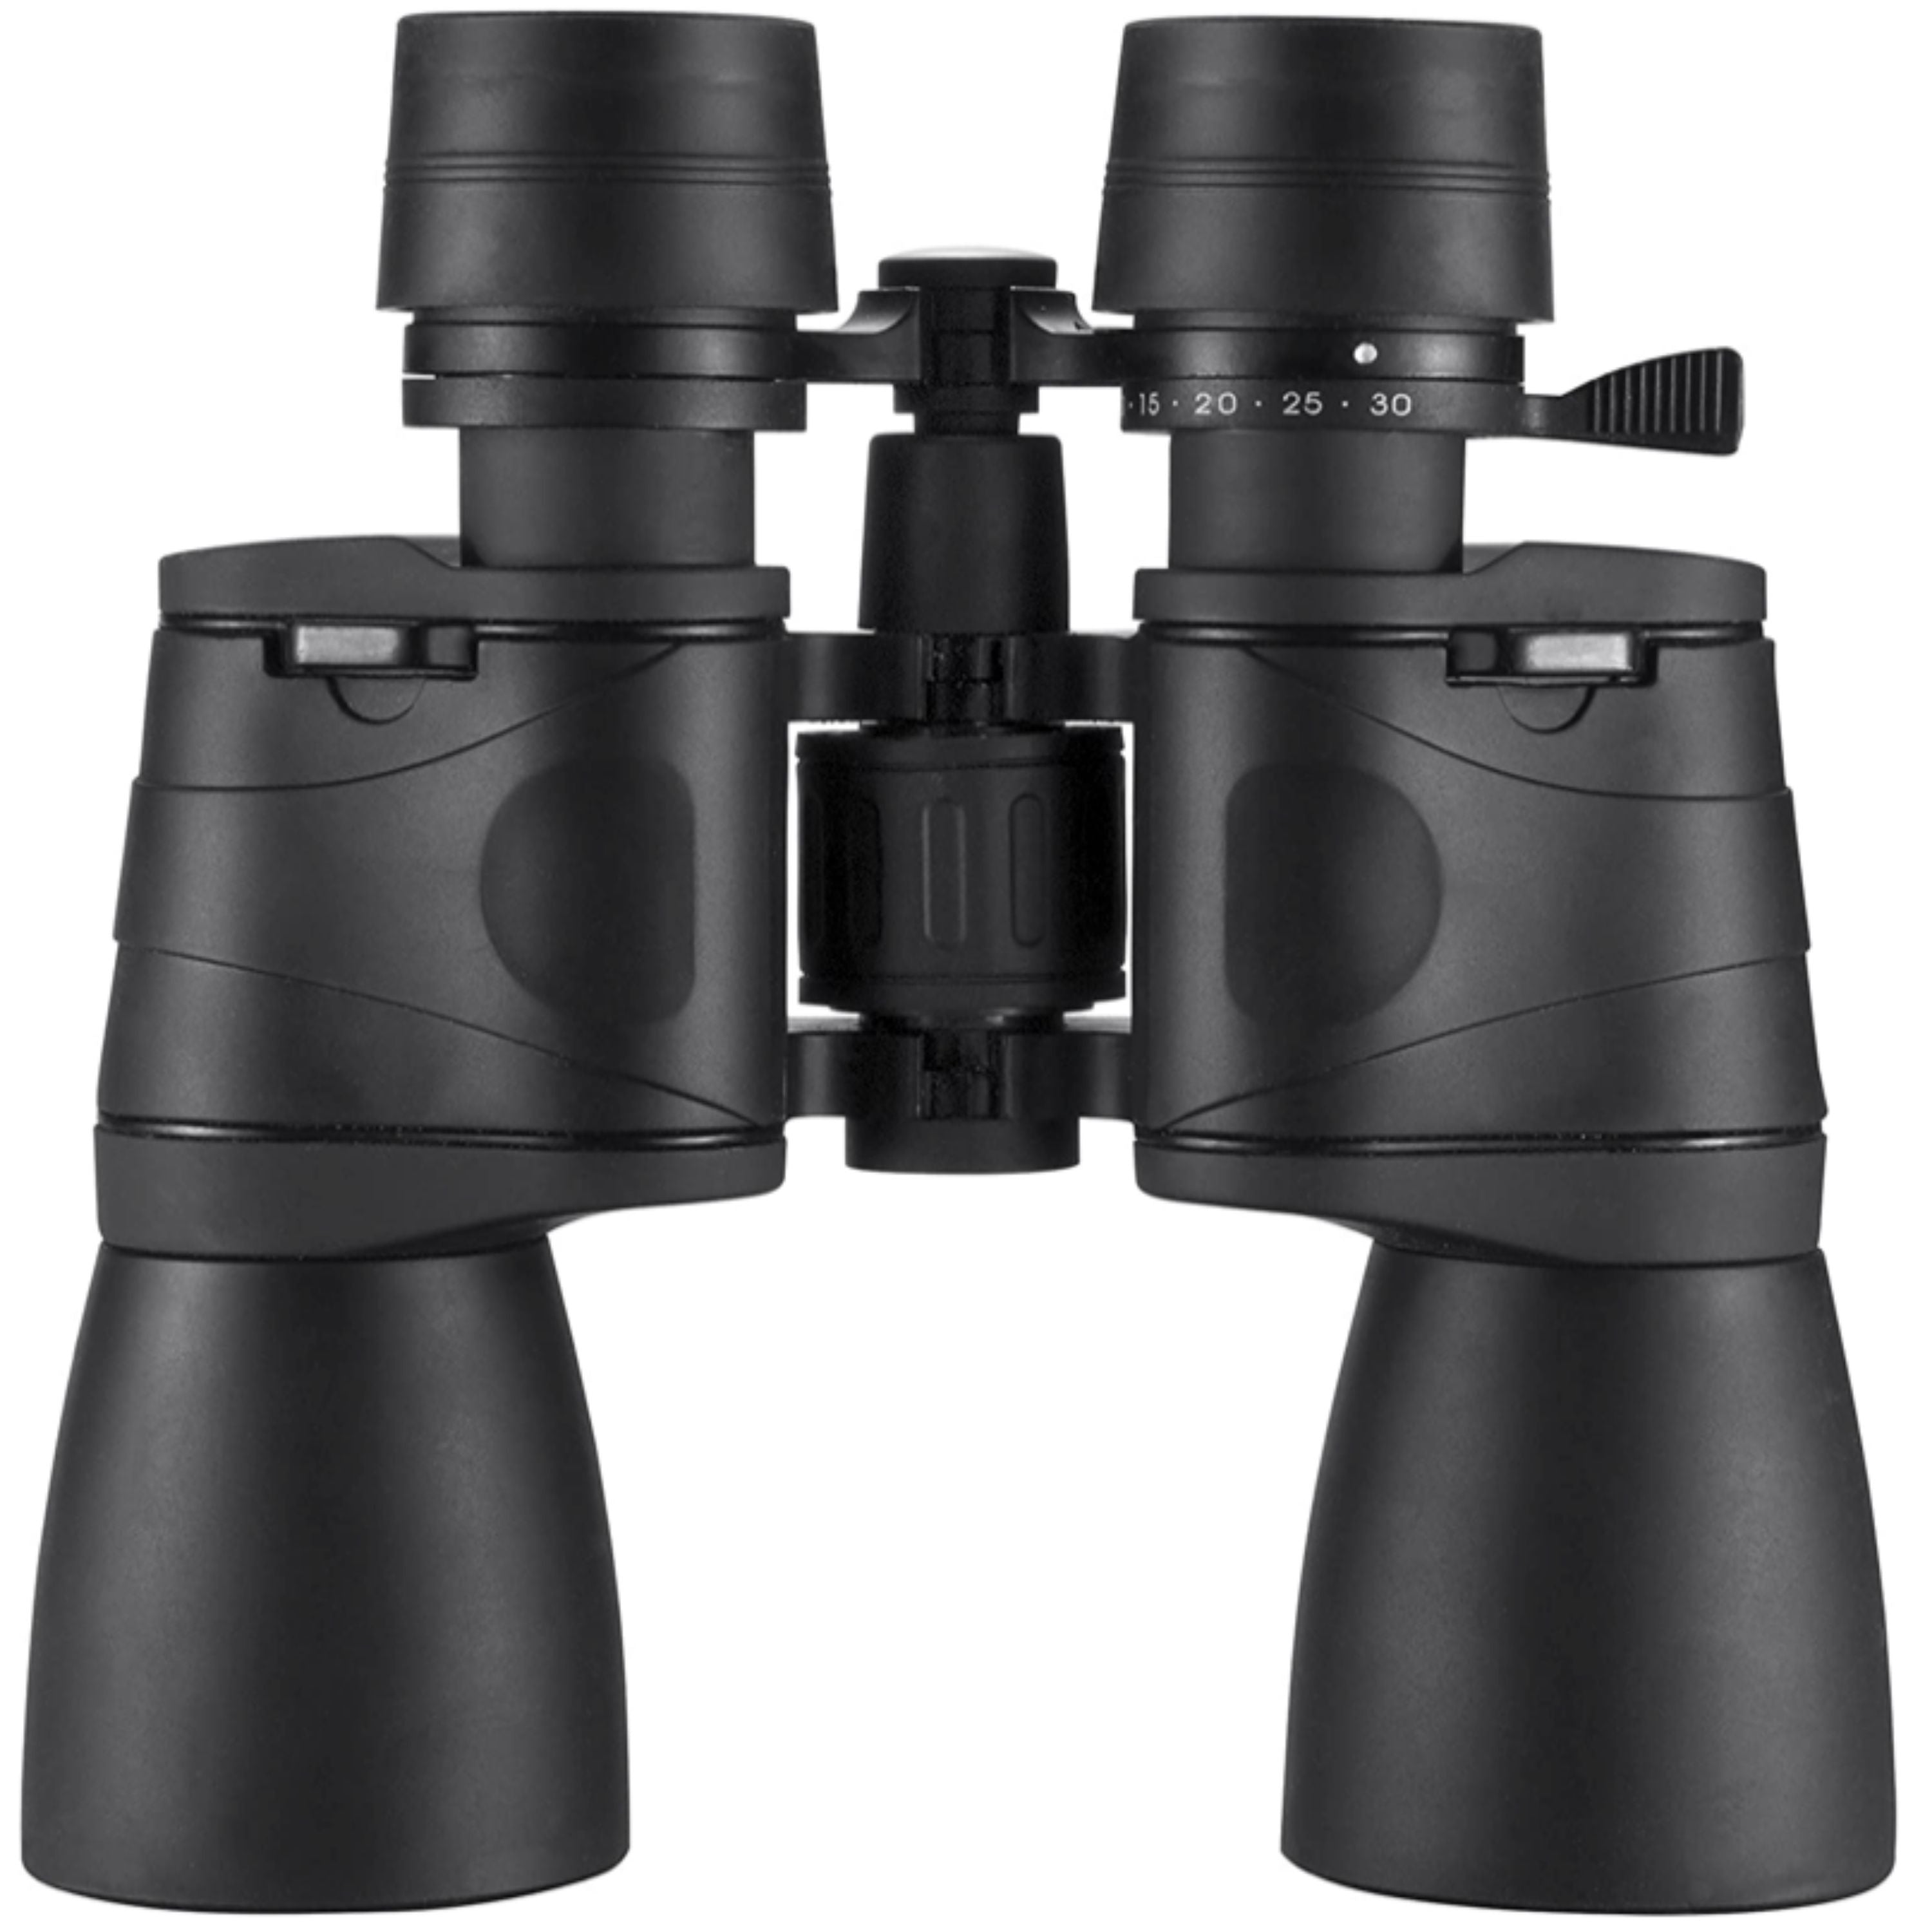 Jumelles "Gladiator" 10-30x50 mm||"Gladiator" 10-30x50 mm Binoculars